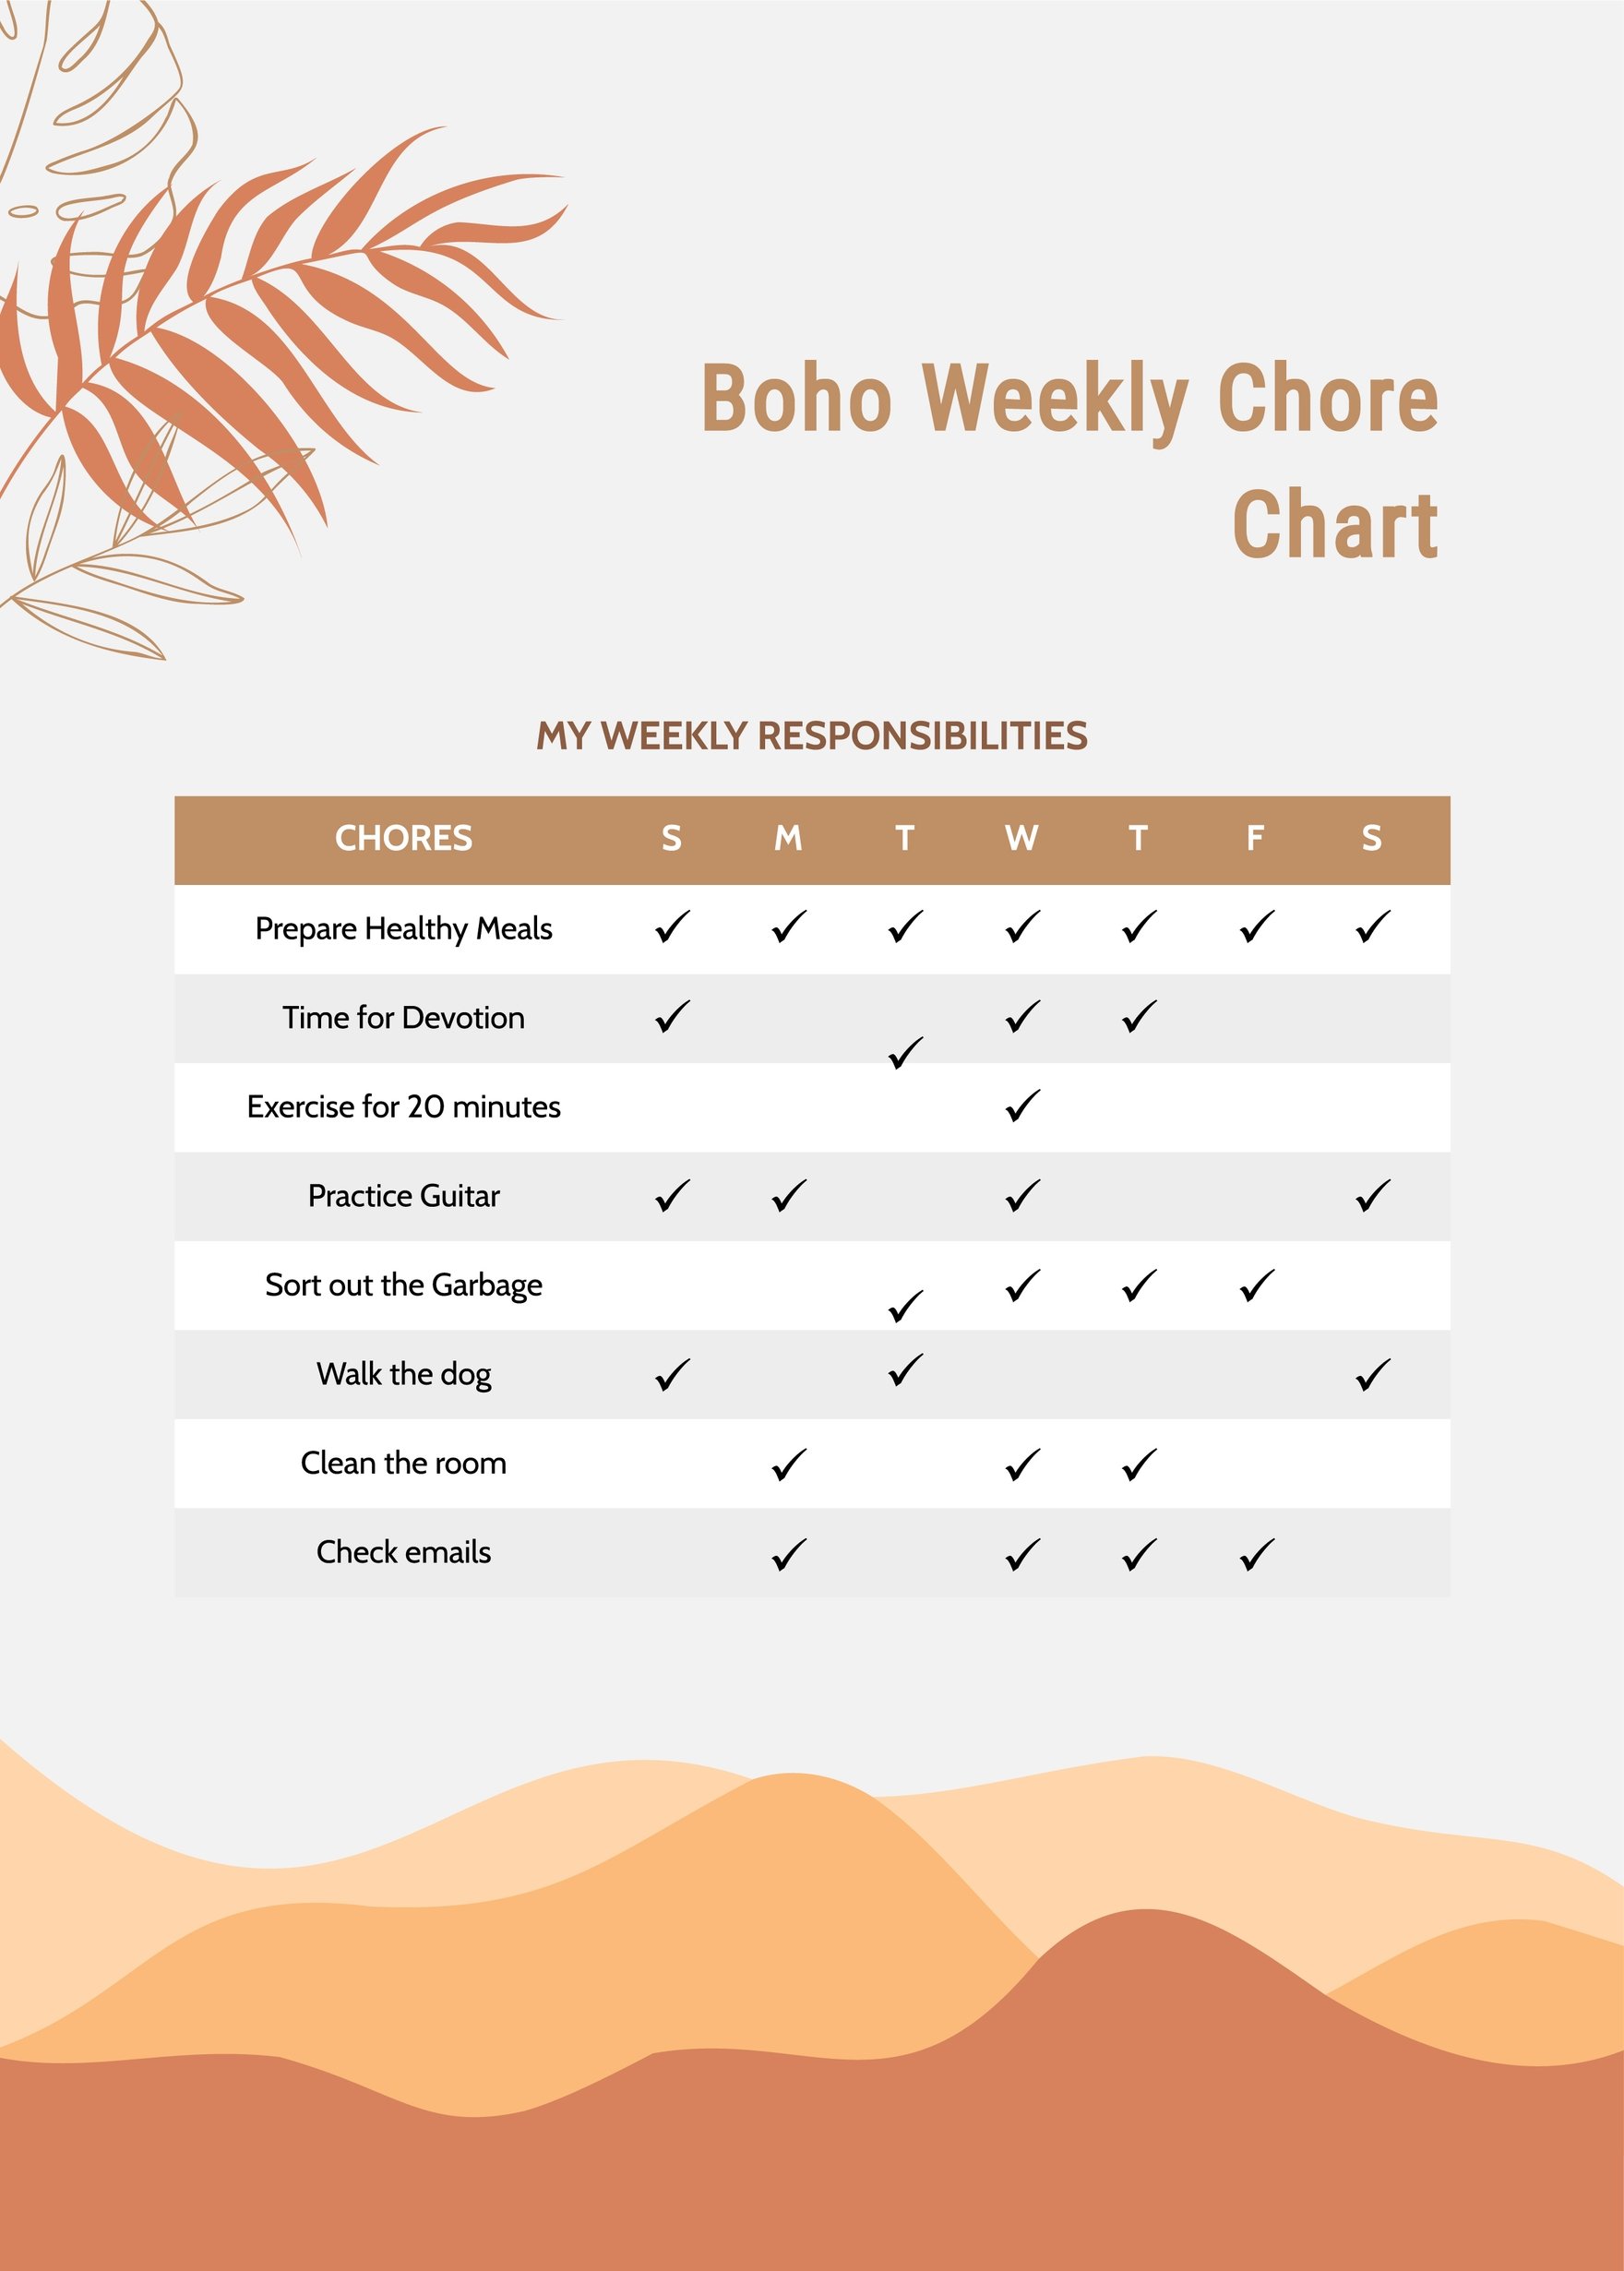 Boho Weekly Chore Chart